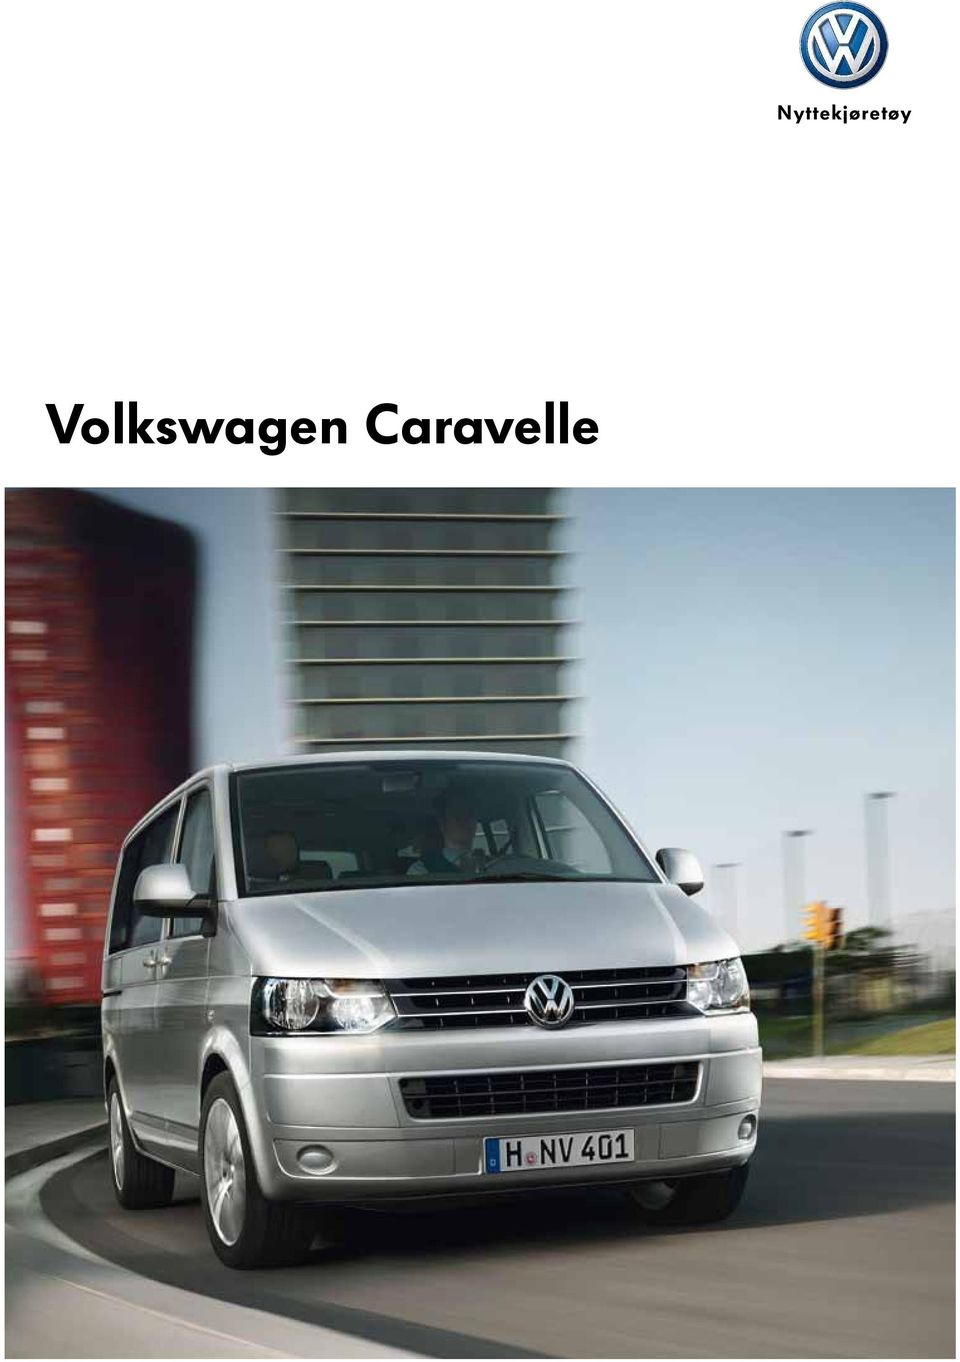 Volkswagen Caravelle. Nyttekjøretøy - PDF Free Download